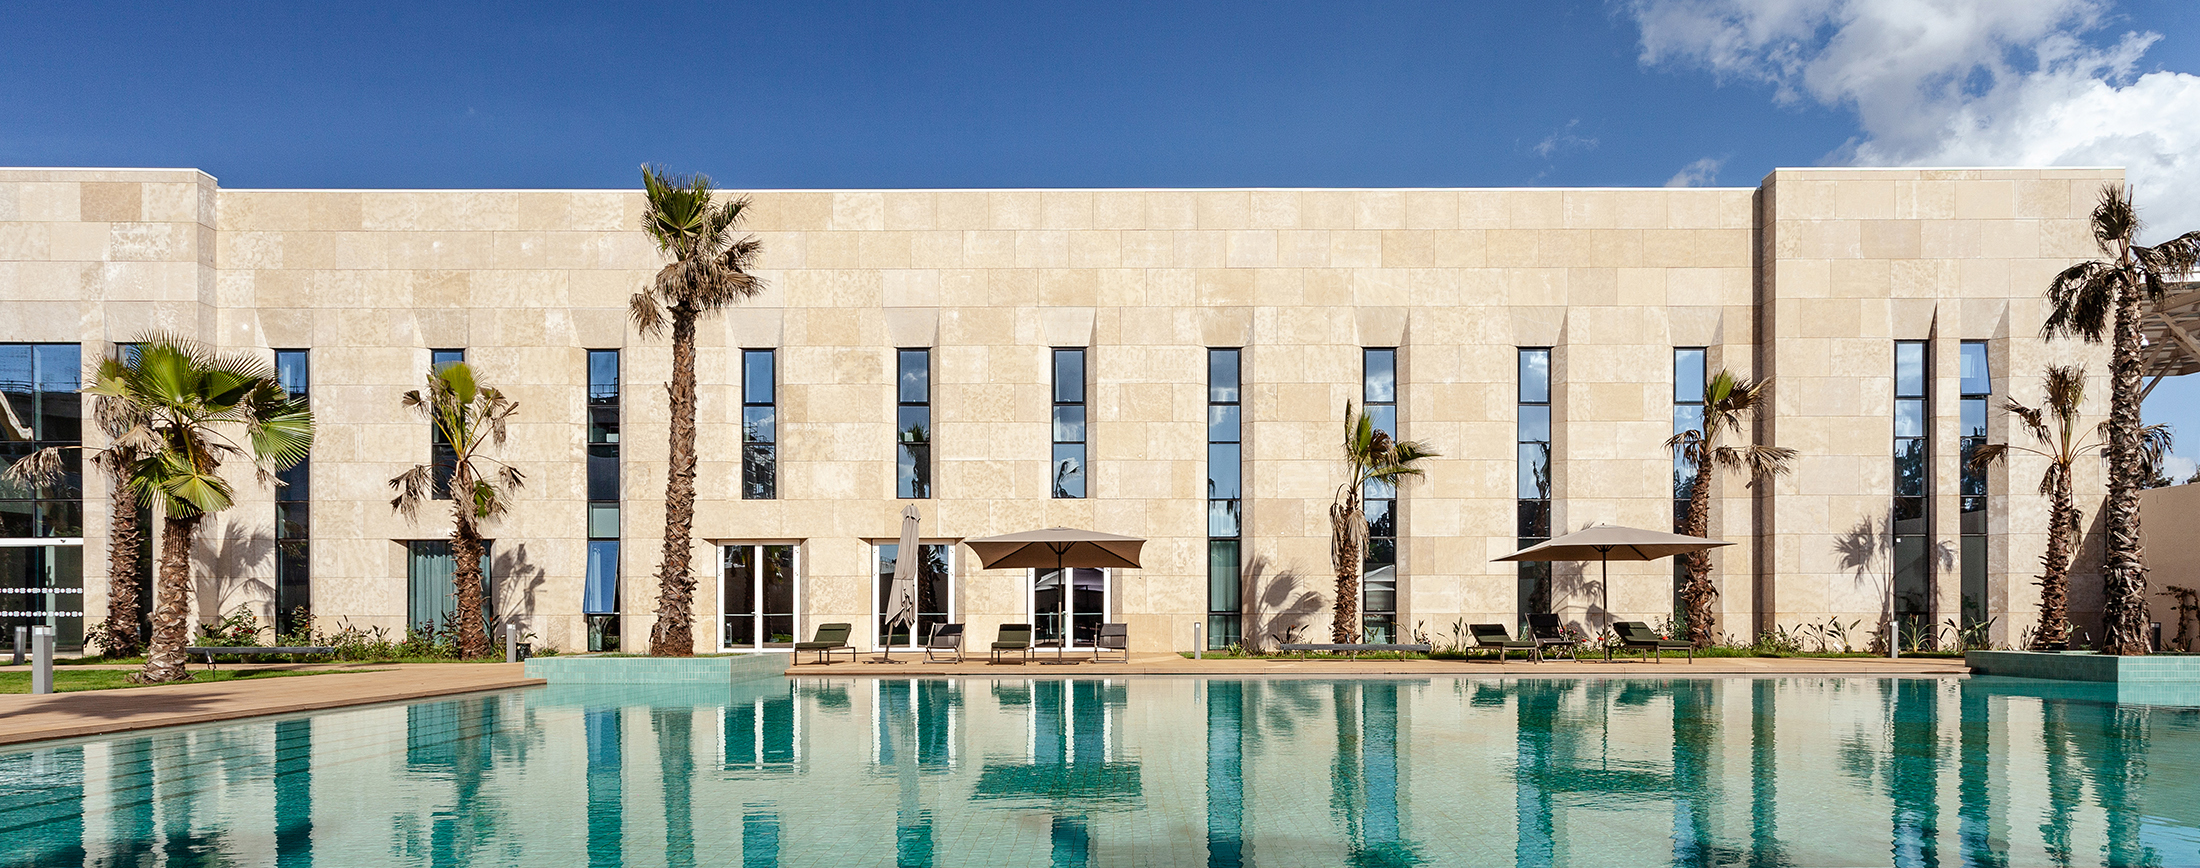 Hotel – Campus for Mohammed VI Polytechnic University Rabat